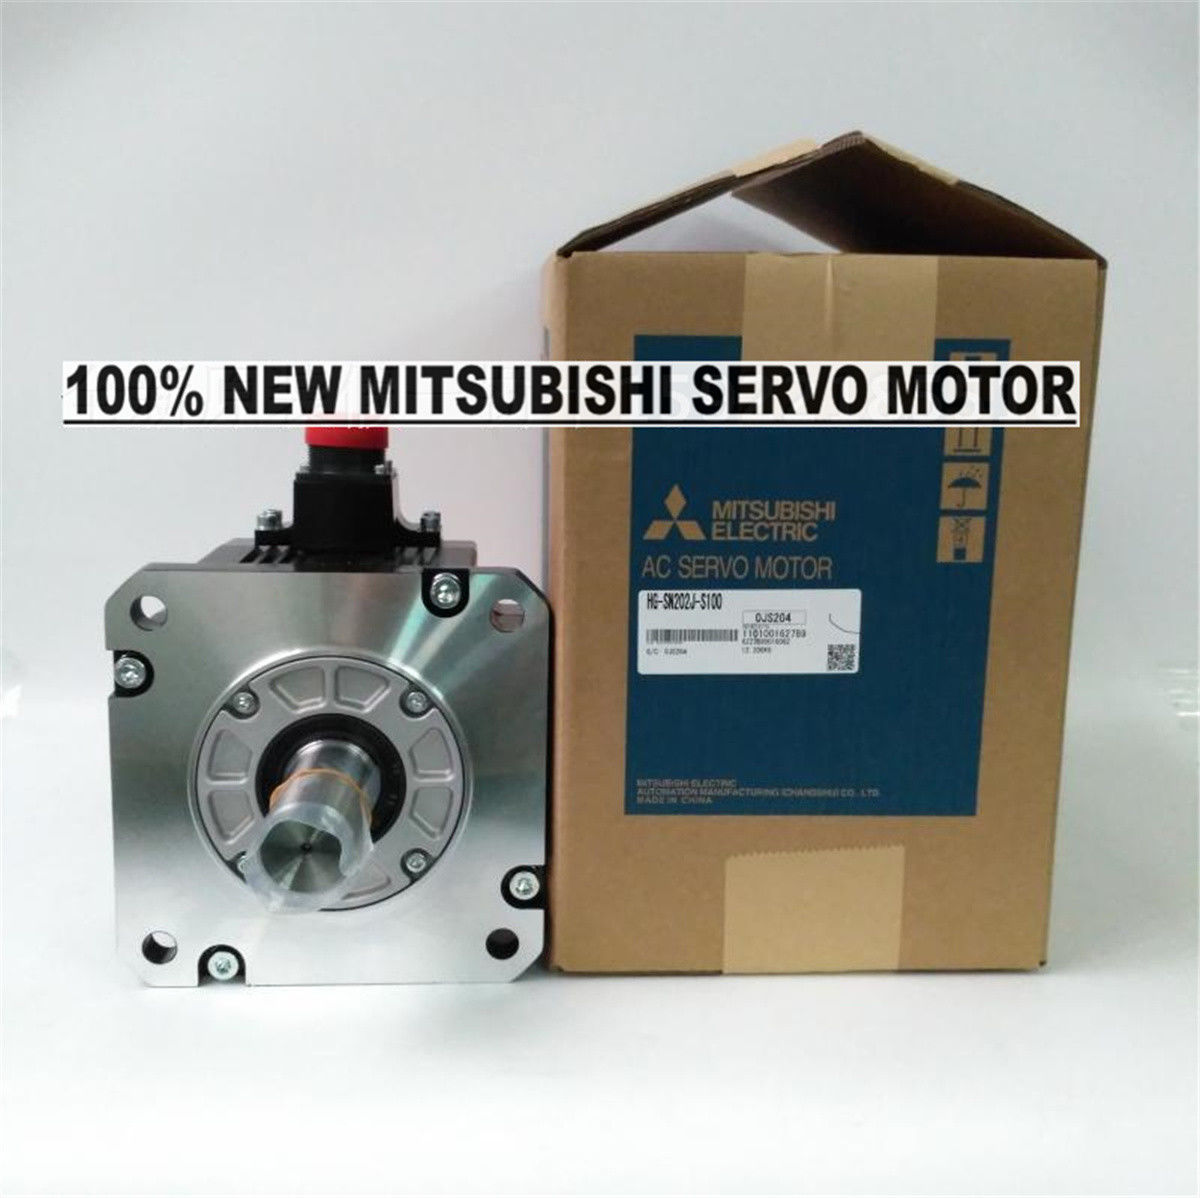 NEW Mitsubishi Servo Motor HG-SN202J-S100 in box HGSN202JS100